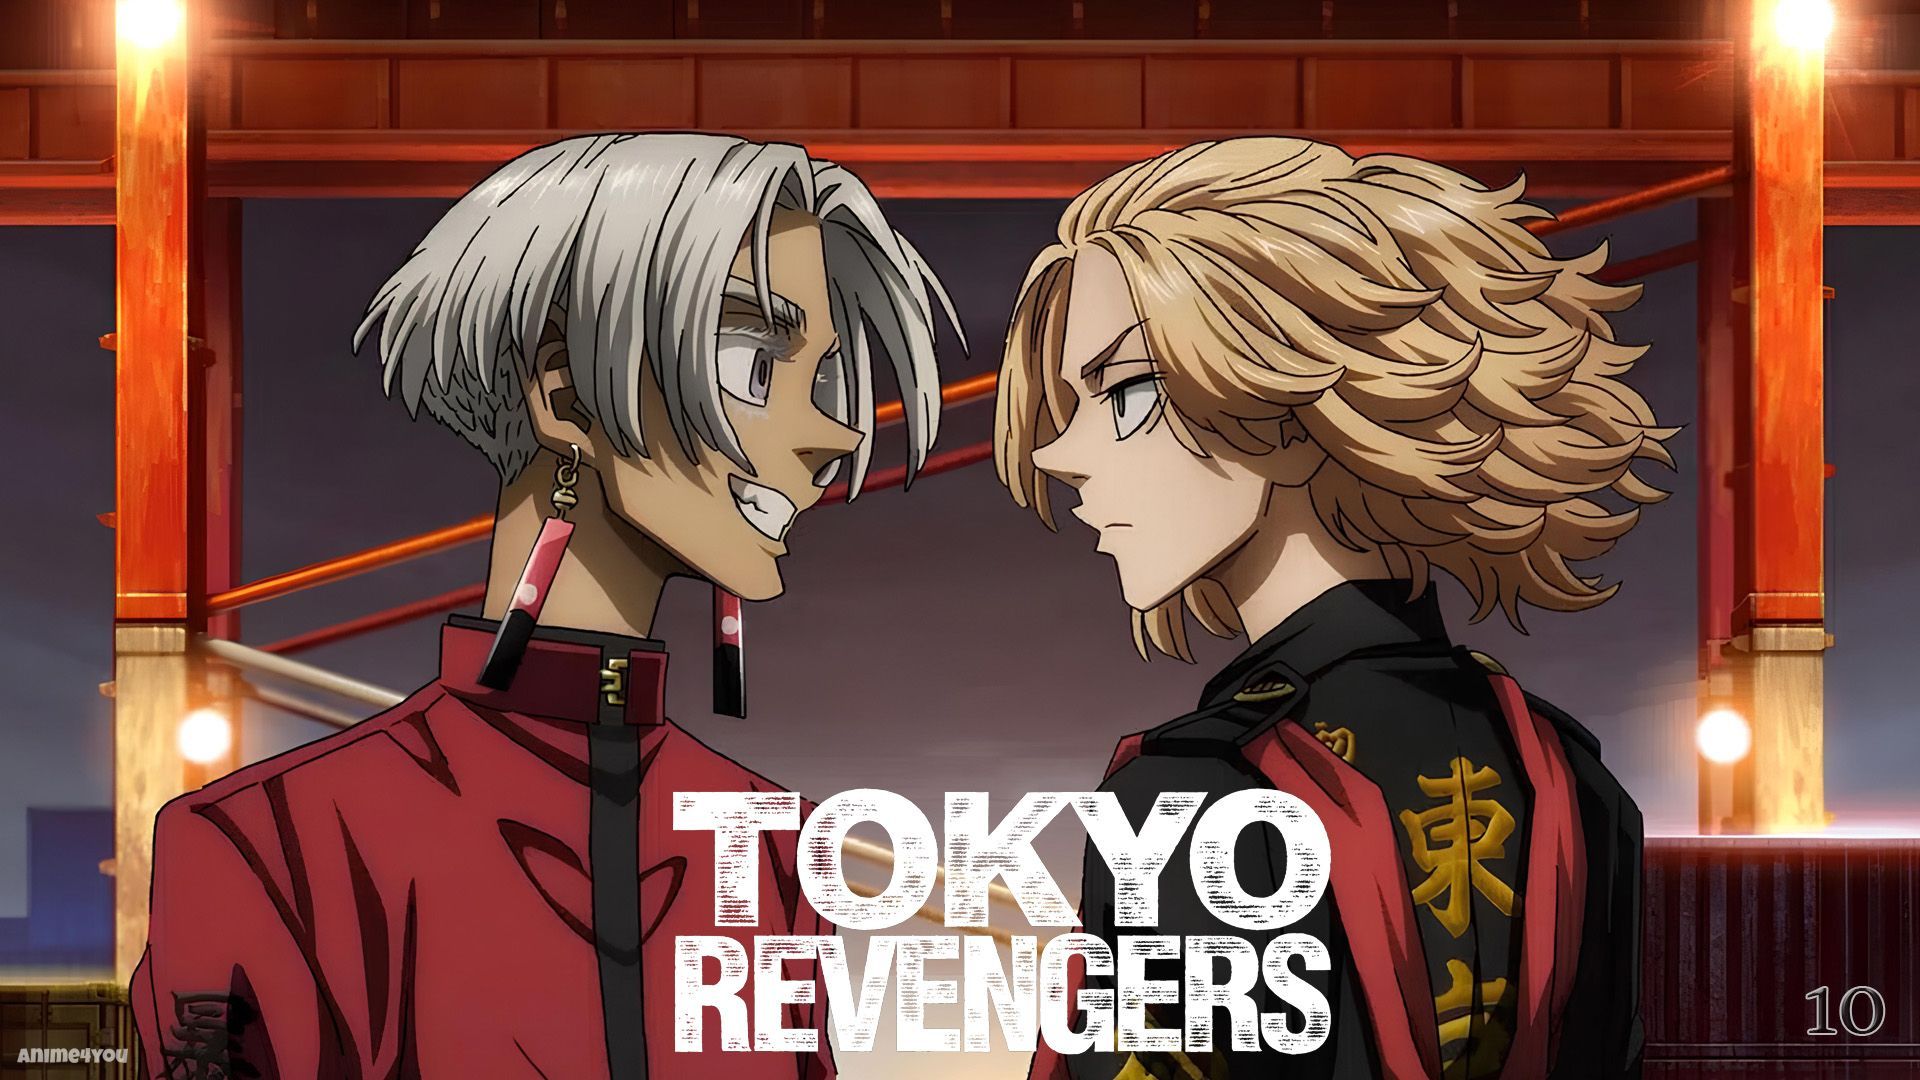 Tokyo Revengers Season 2 - Episode 14 [Bahasa Indonesia] 